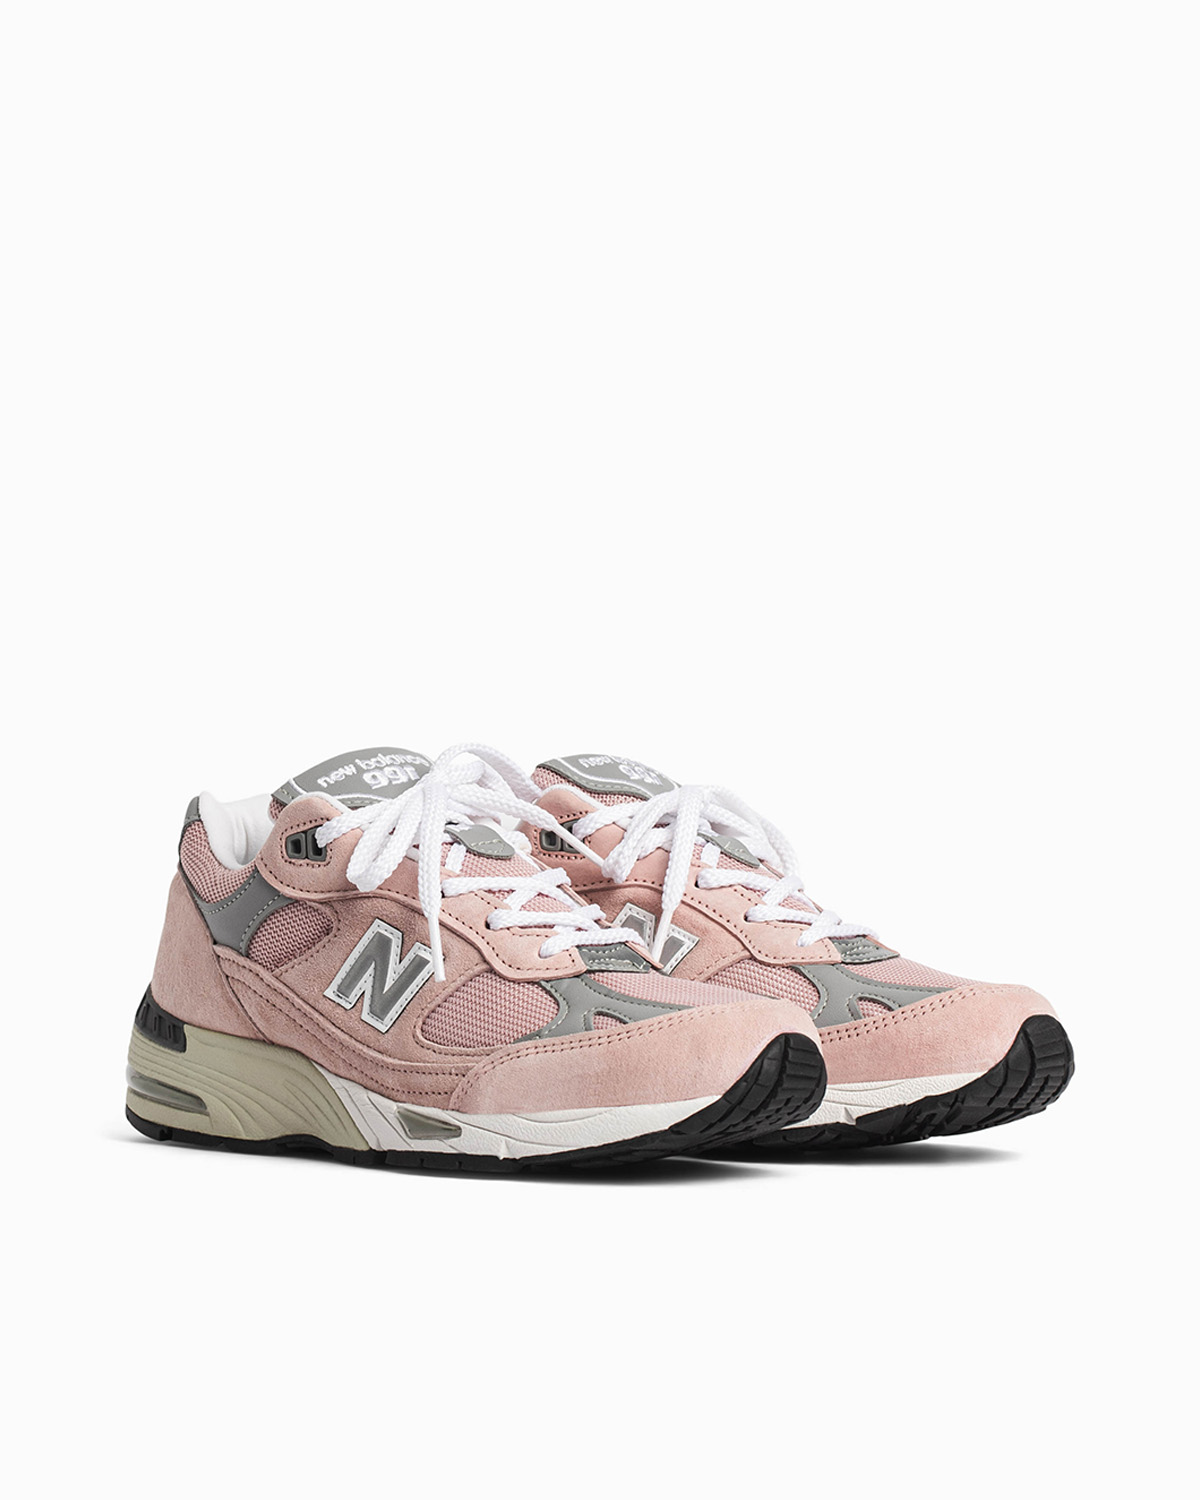 M991PNK New Balance Footwear Sneakers Pink